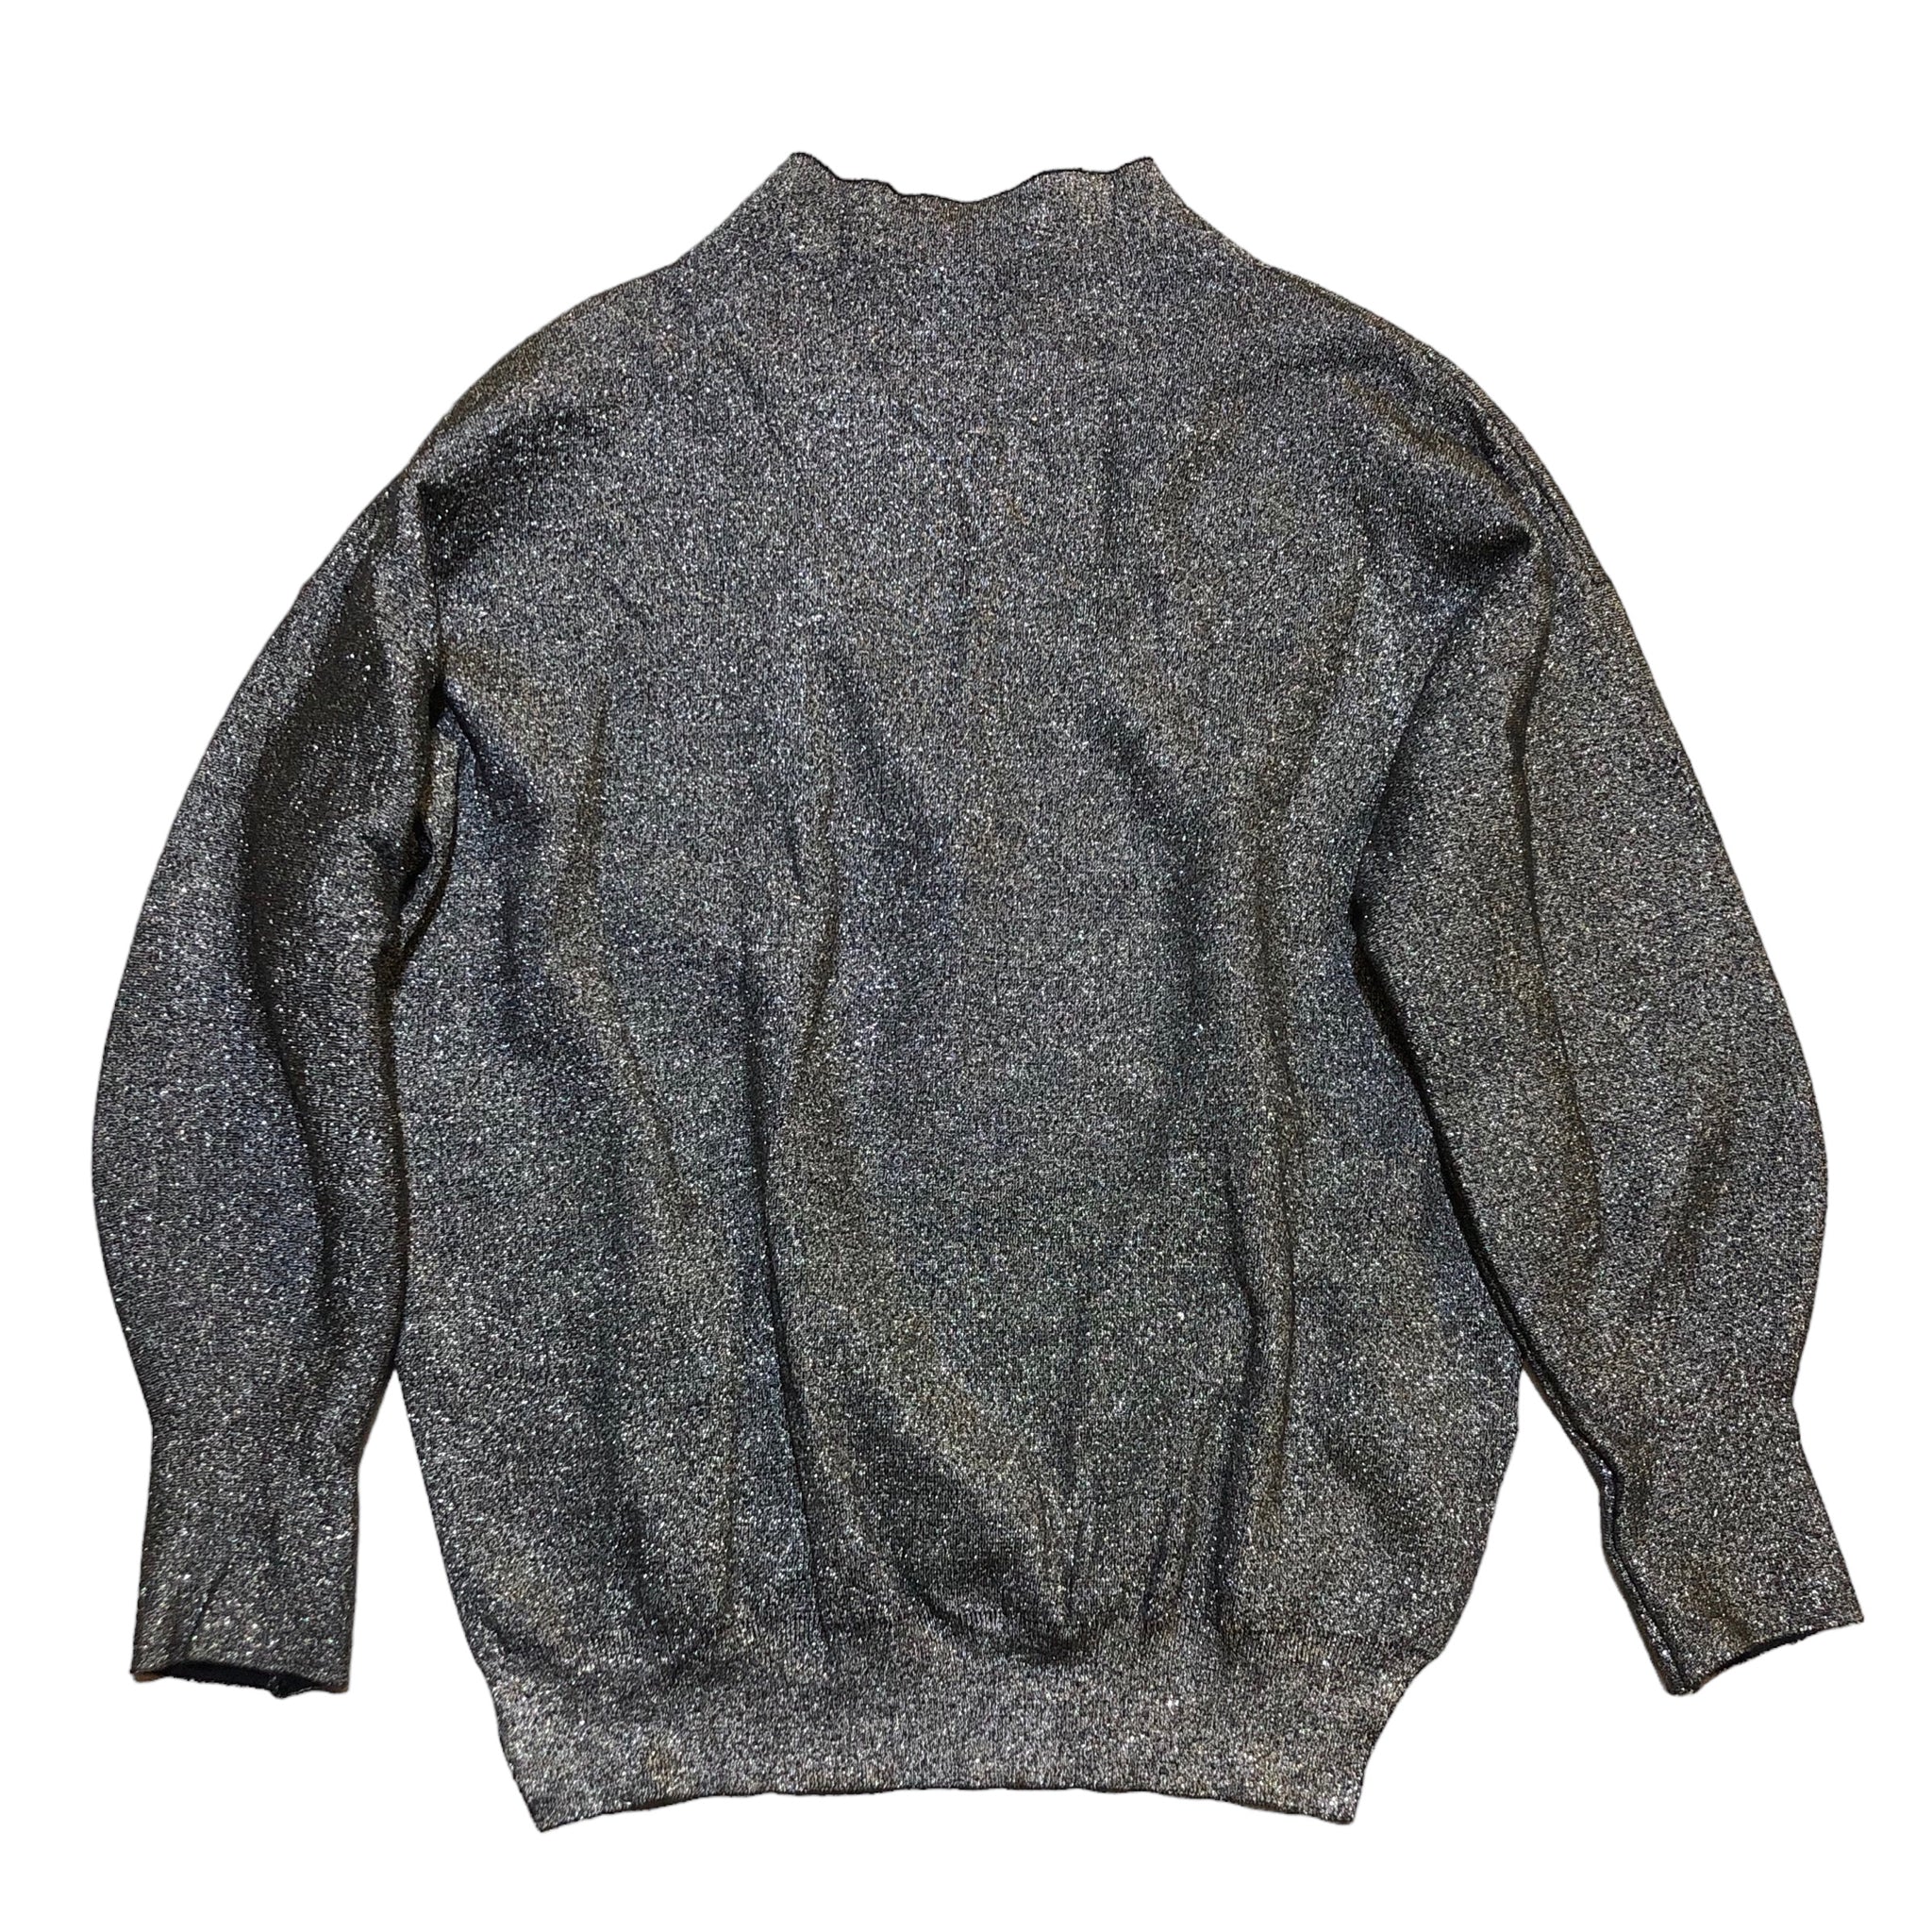 Vintage Silver Knit Sweater